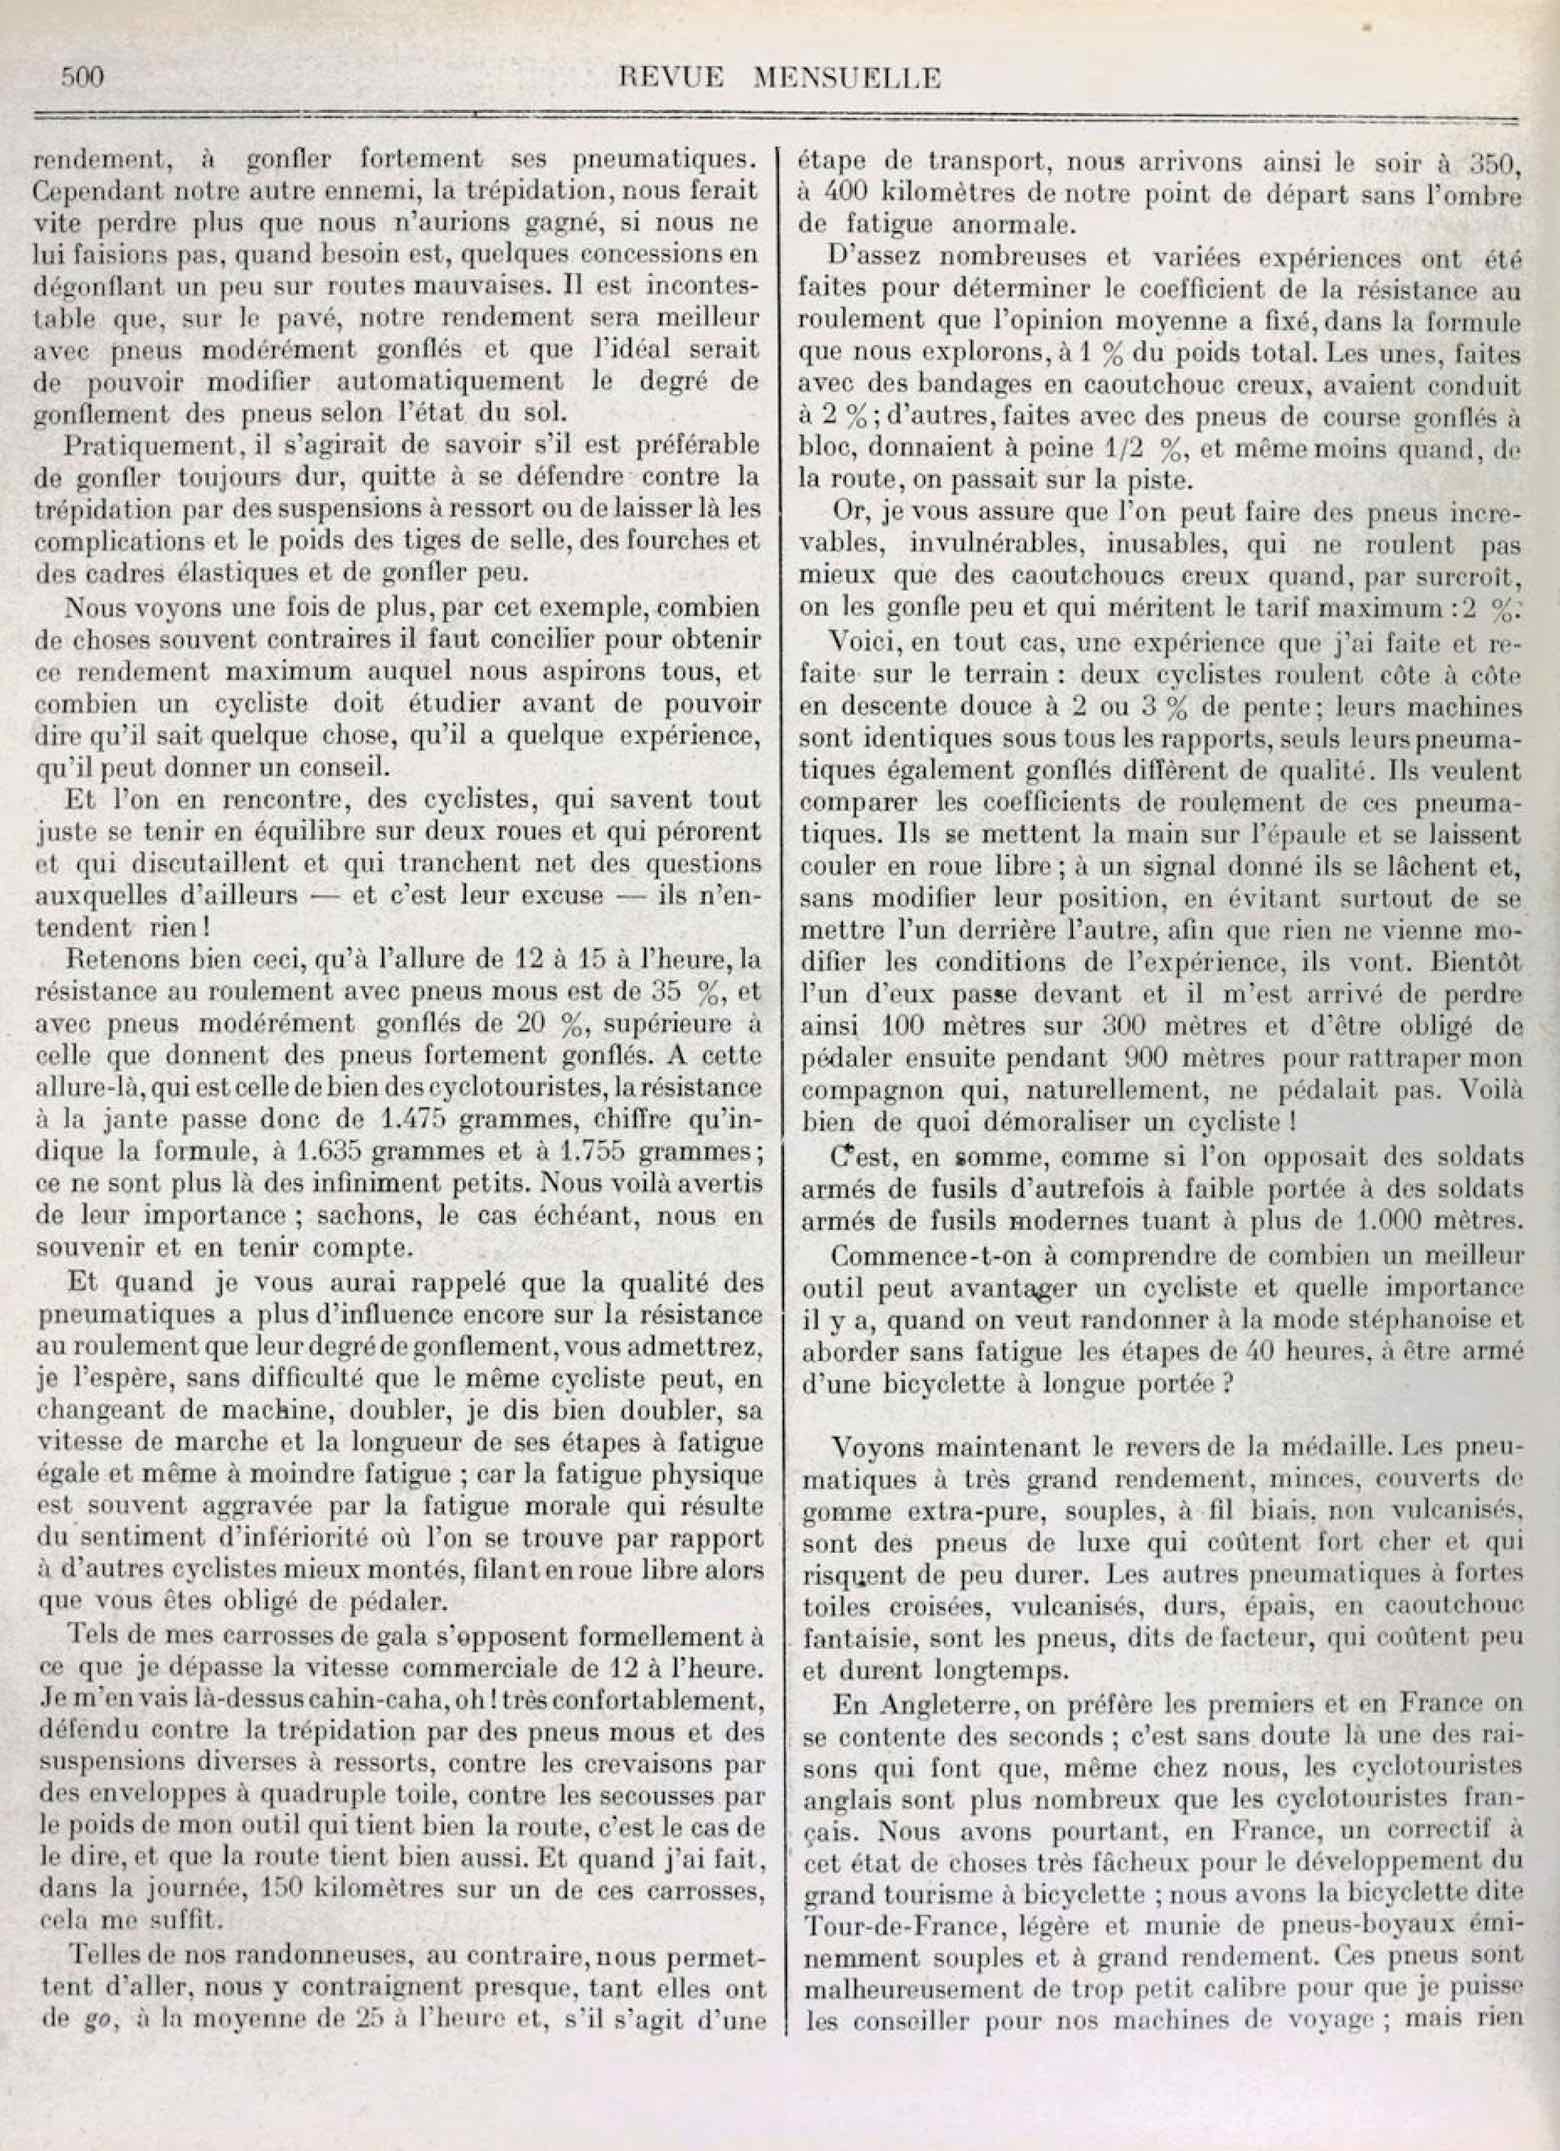 T.C.F. Revue Mensuelle November 1912 - Nos Ennemis (part IV) scan 3 main image